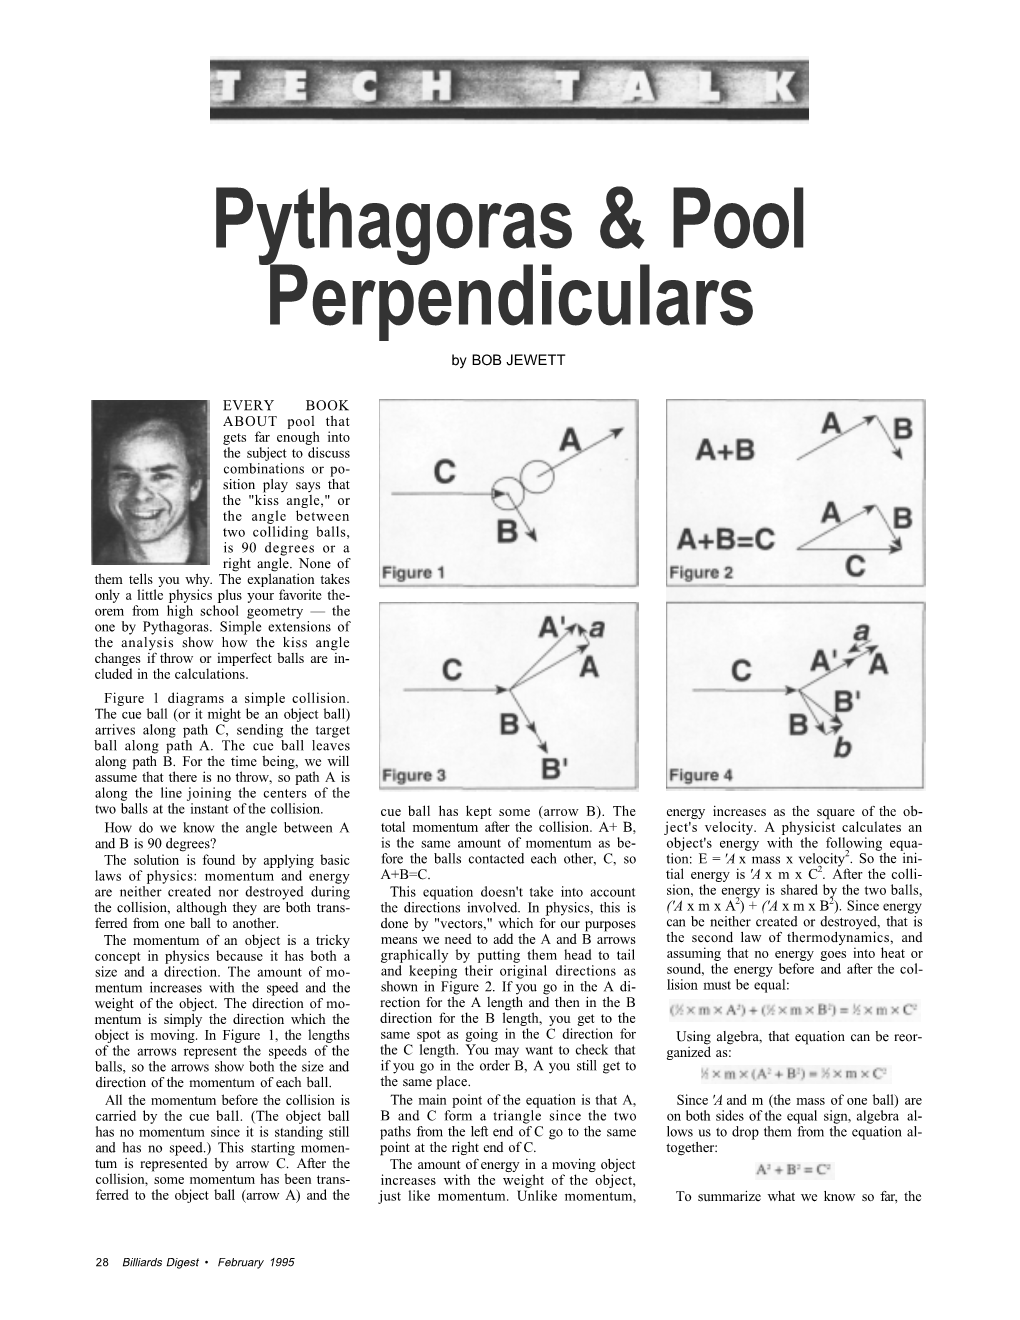 Pythagoras & Pool Perpendiculars